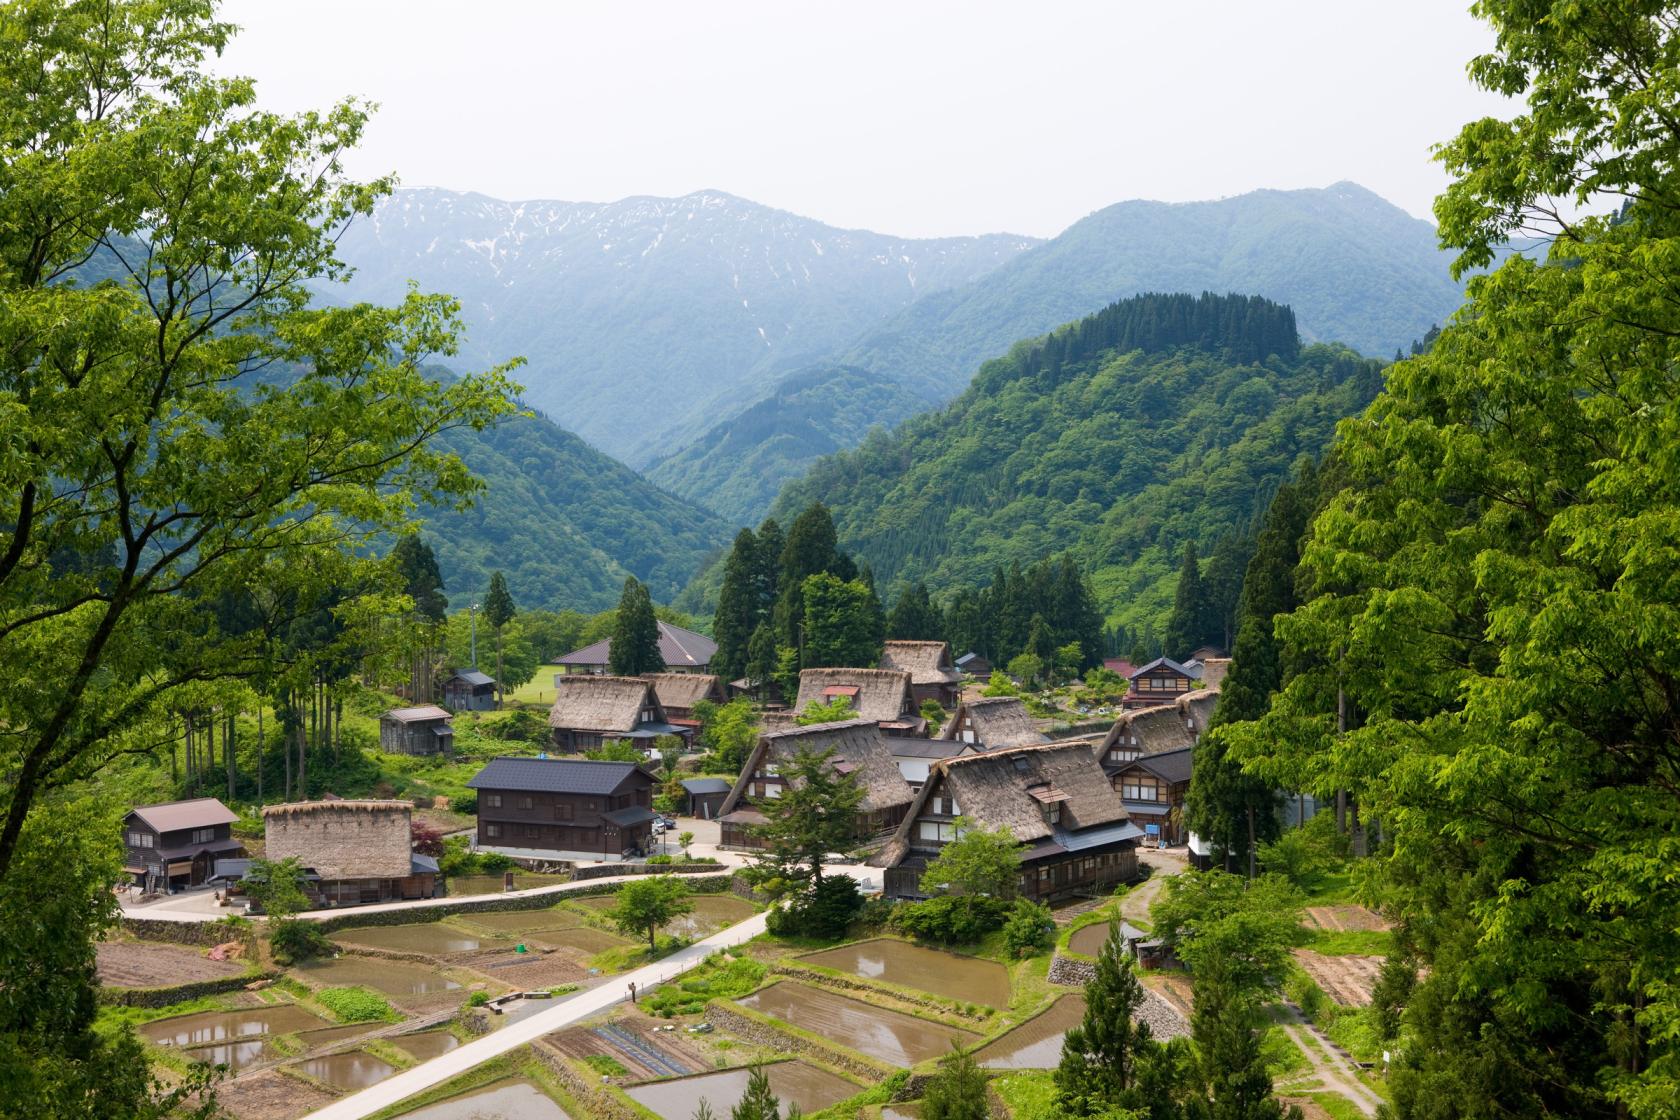 The Gassho Houses of Gokayama